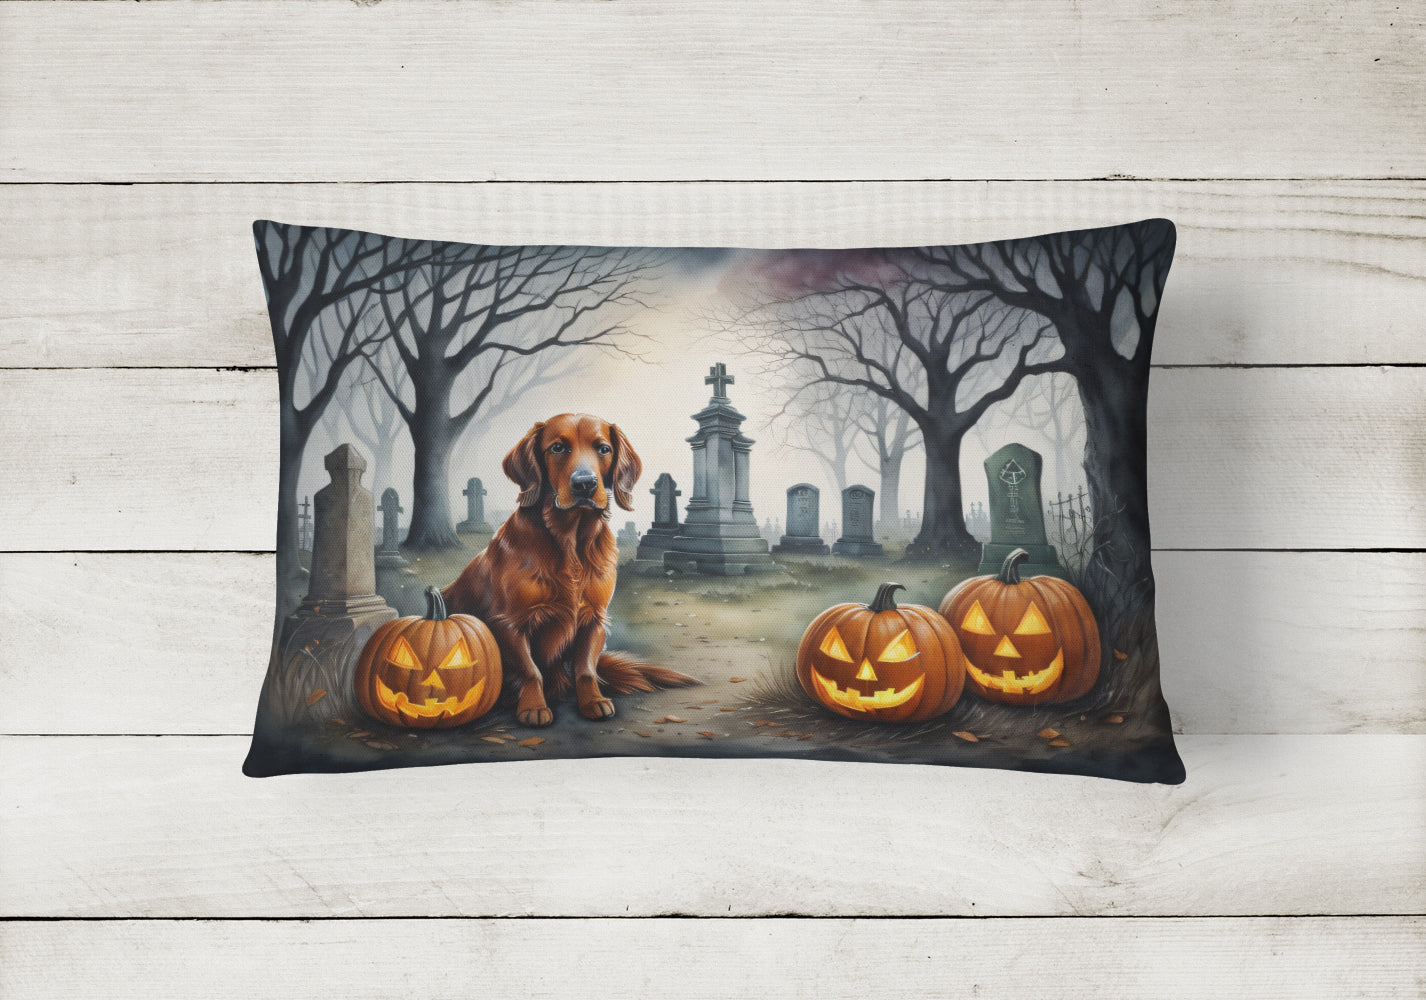 Buy this Irish Setter Spooky Halloween Fabric Decorative Pillow